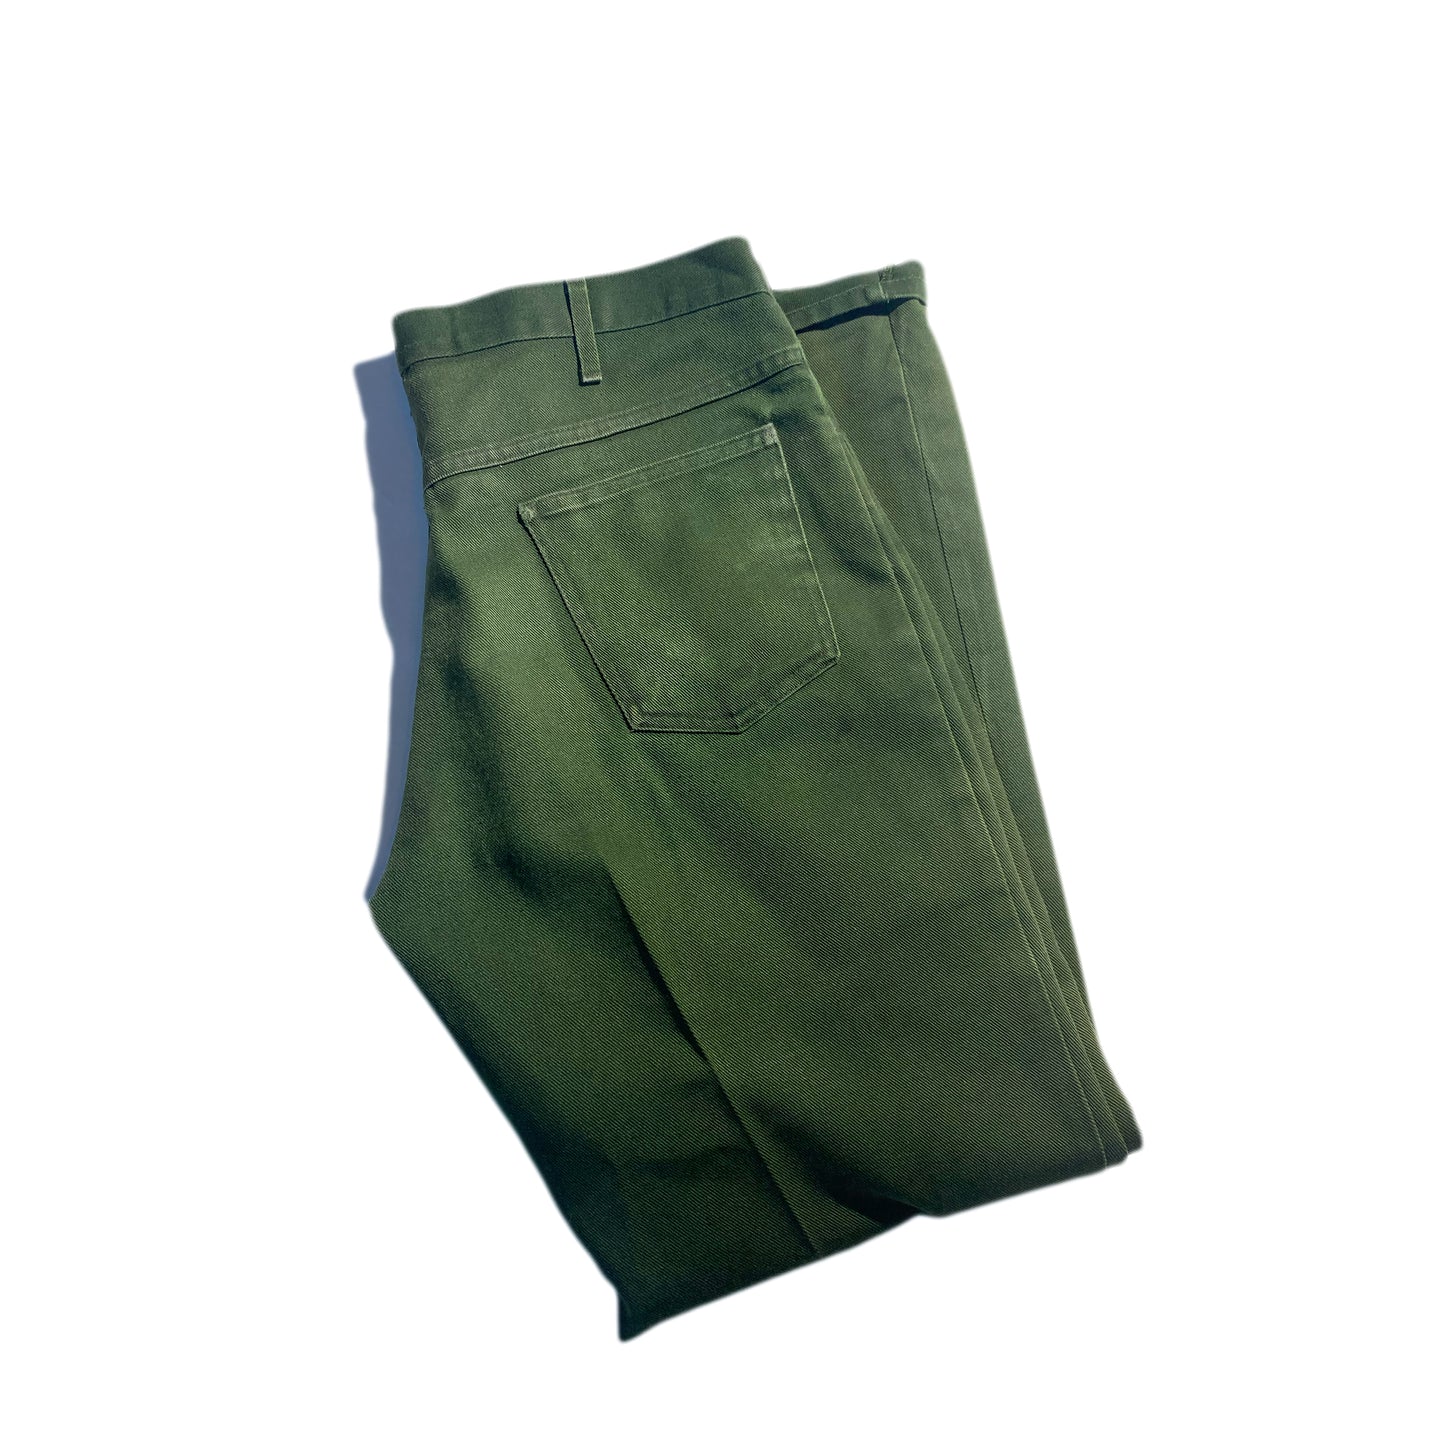 Vintage Army Green Pants SCOUTS